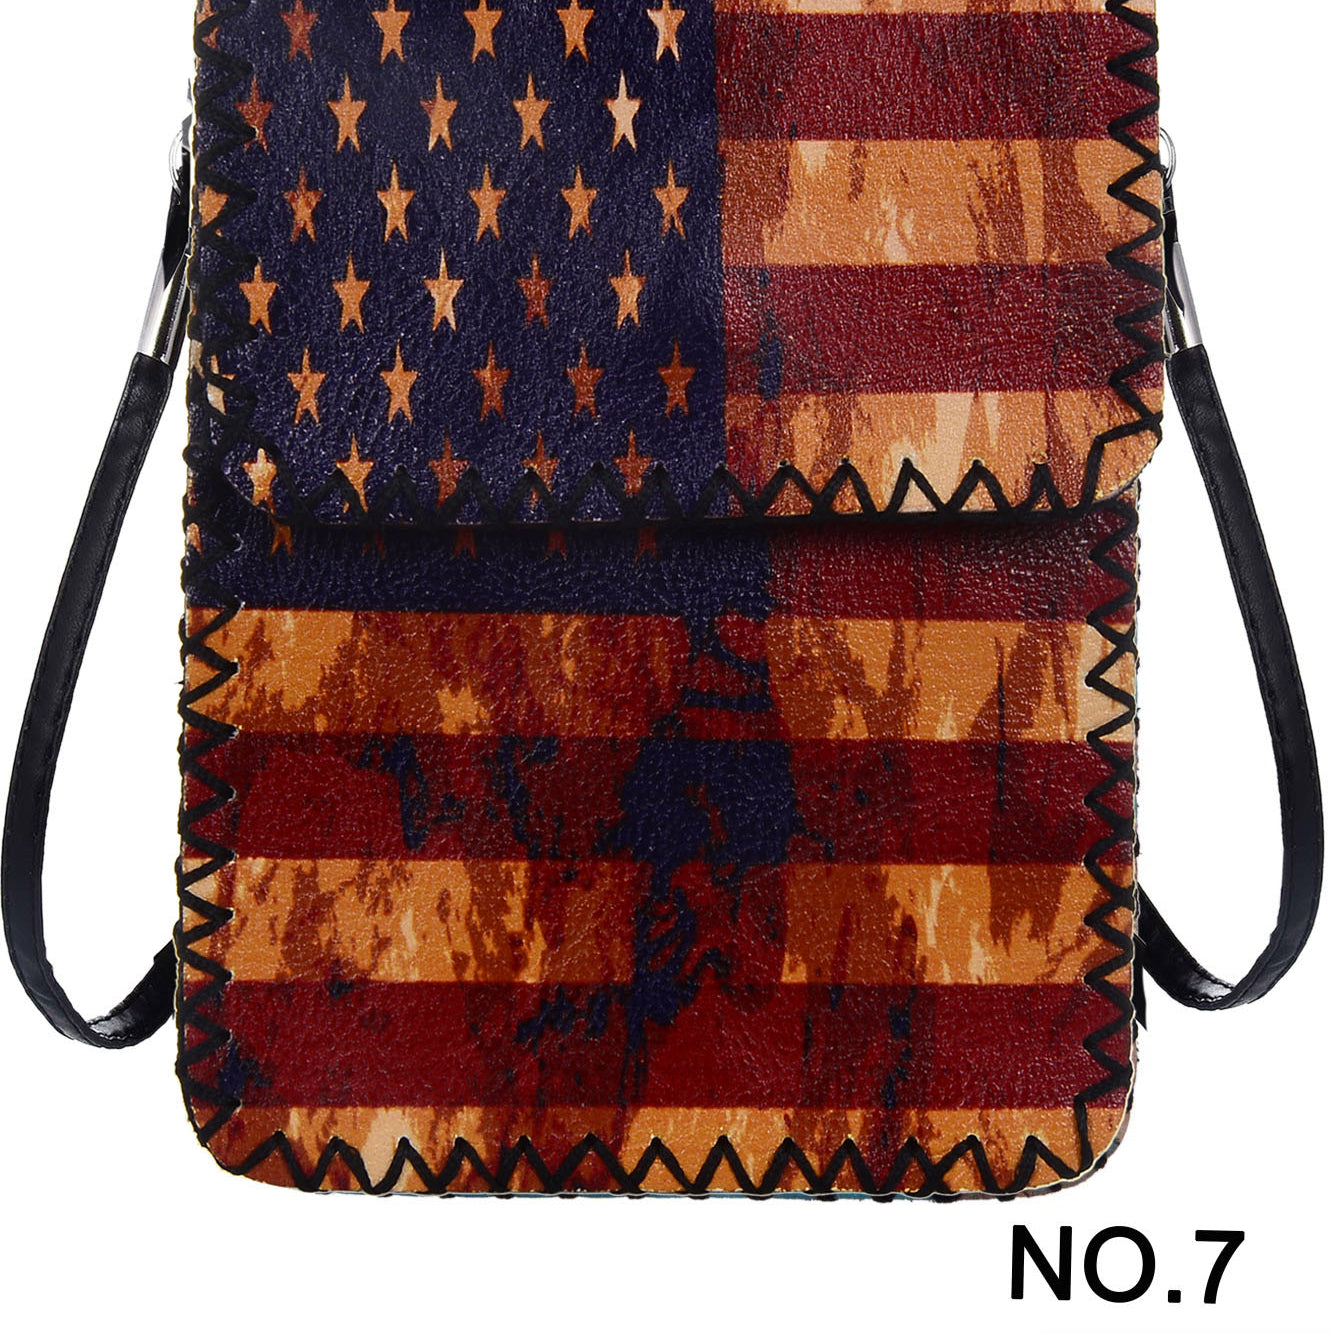 American Flag Printed Crossbody Bag HB0580 - NO.7